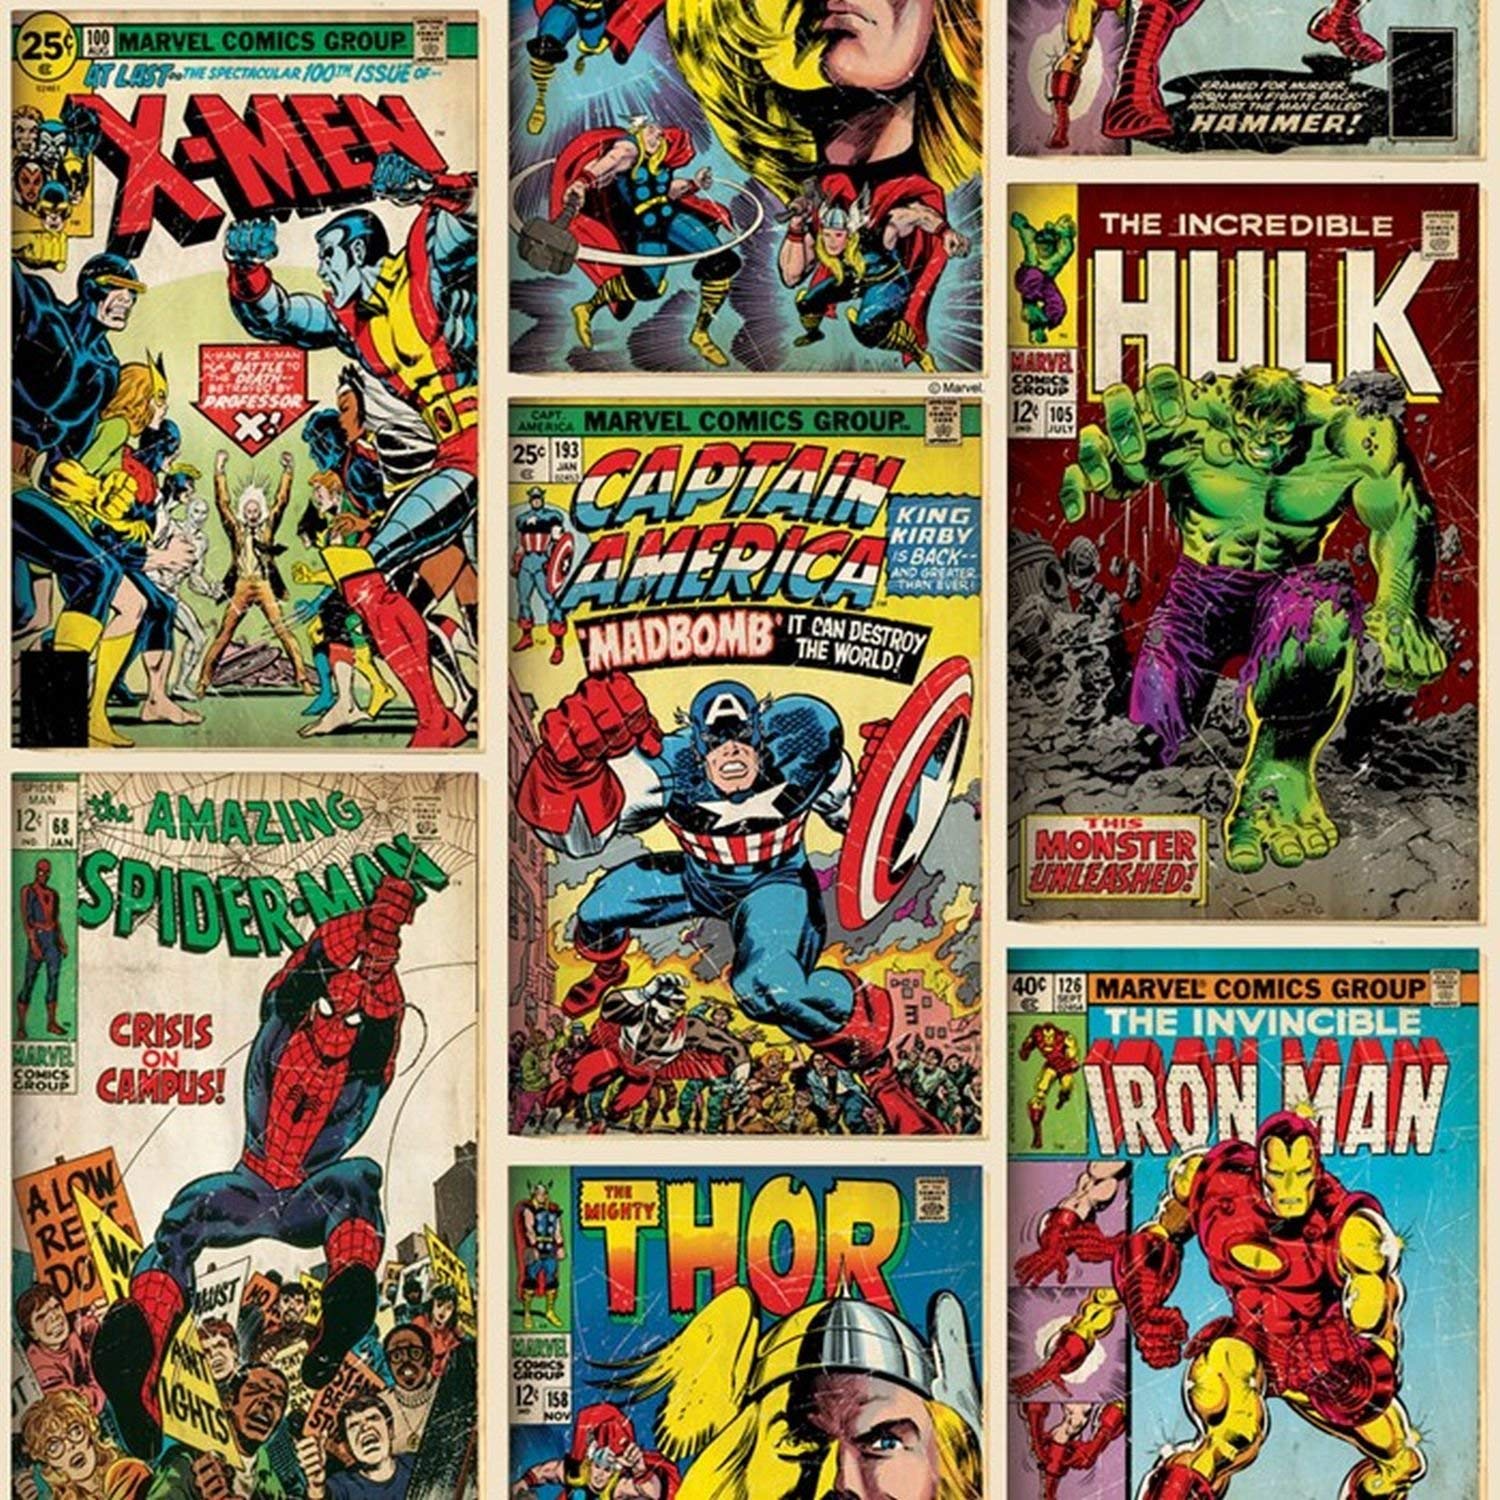 Marvel Comics Action Heroes Wallpaper: Amazon.co.uk: Kitchen & Home